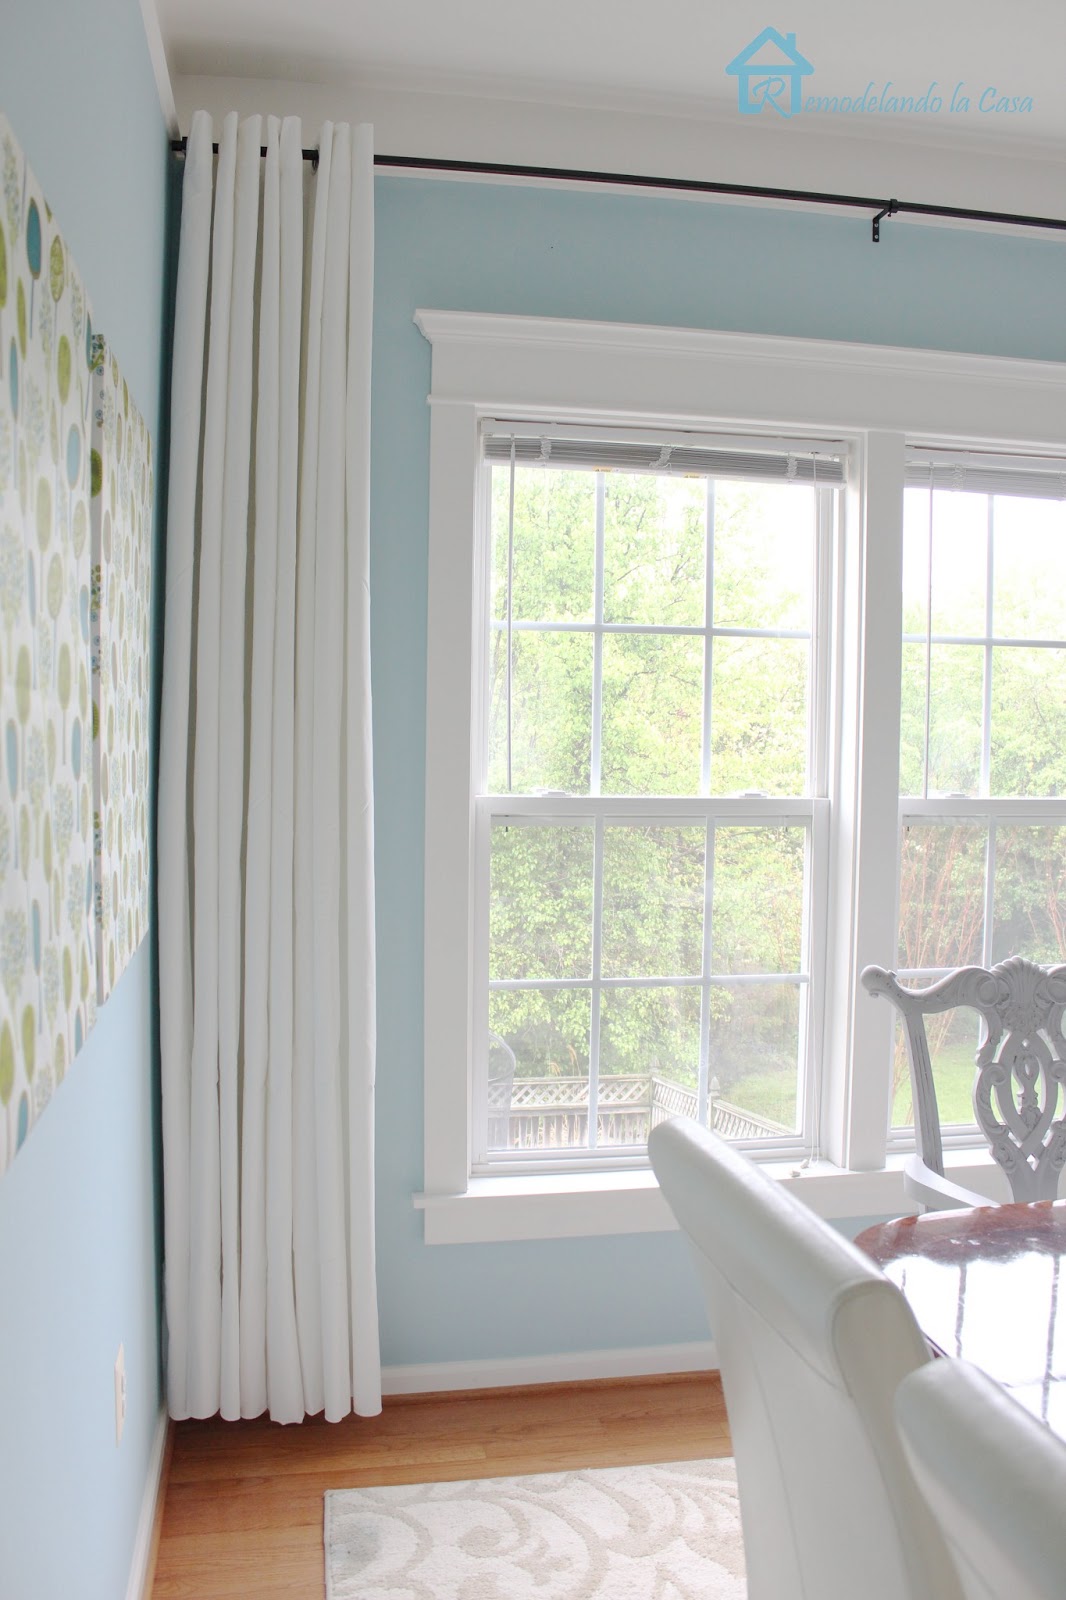 Remodelando la Casa: How to Make your Curtains Longer